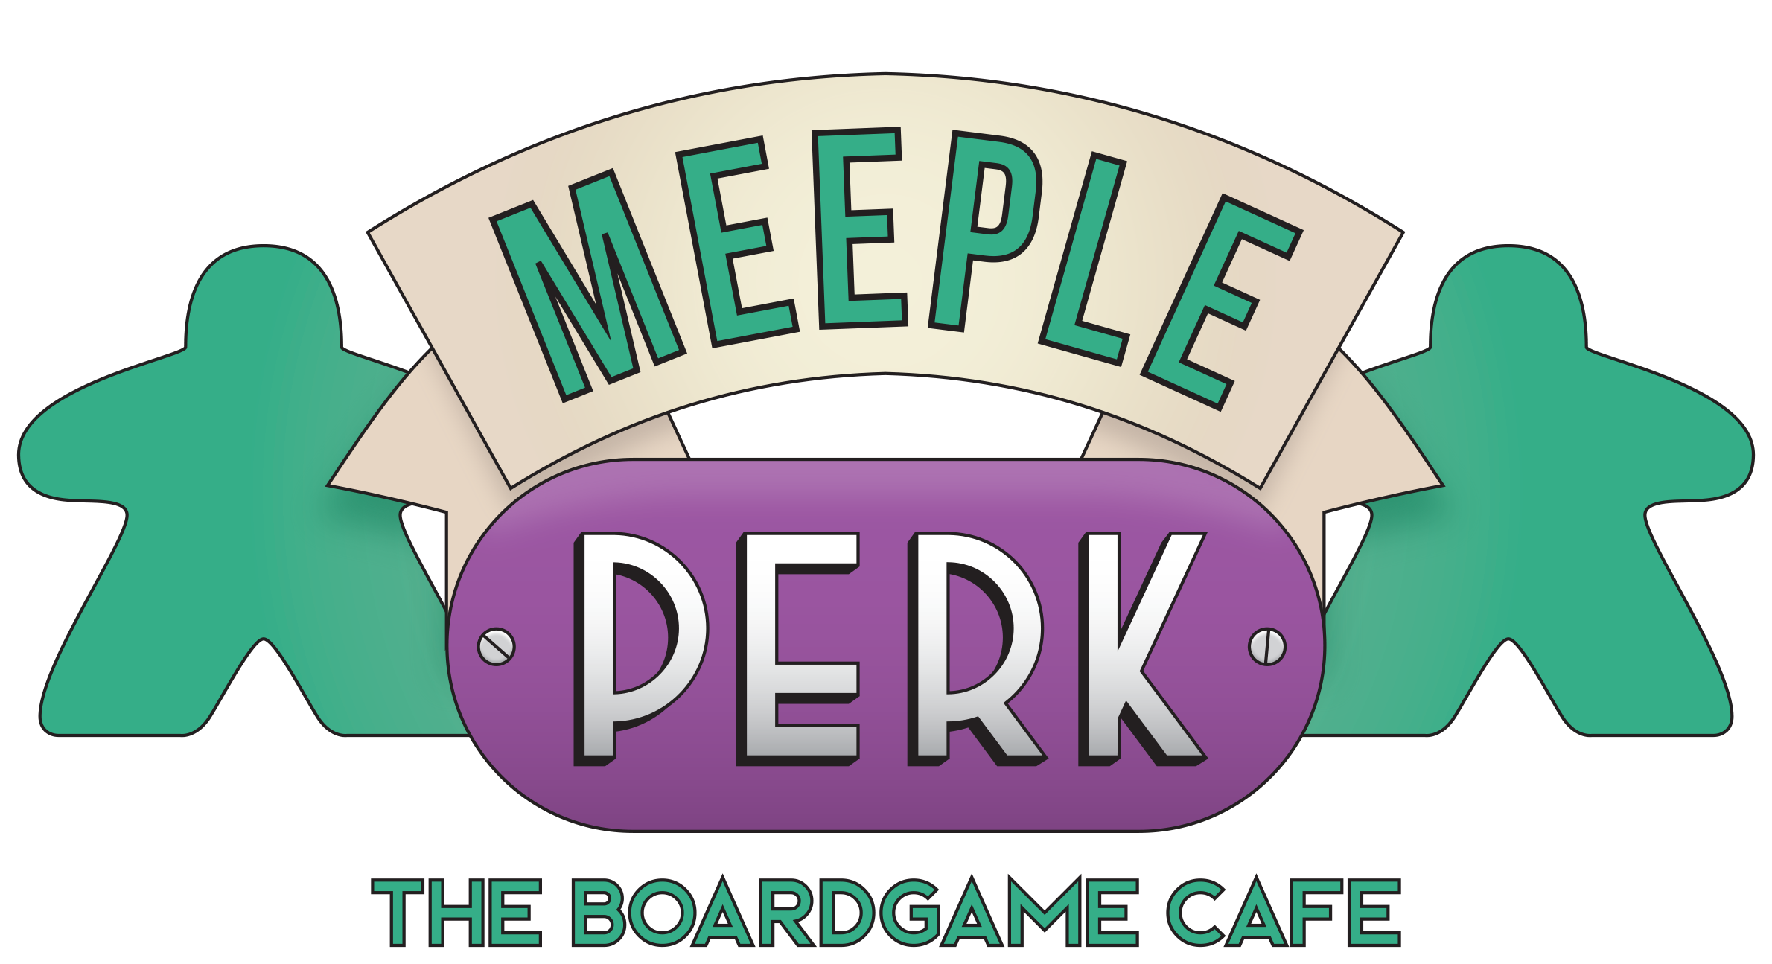 Meeple Perk logo